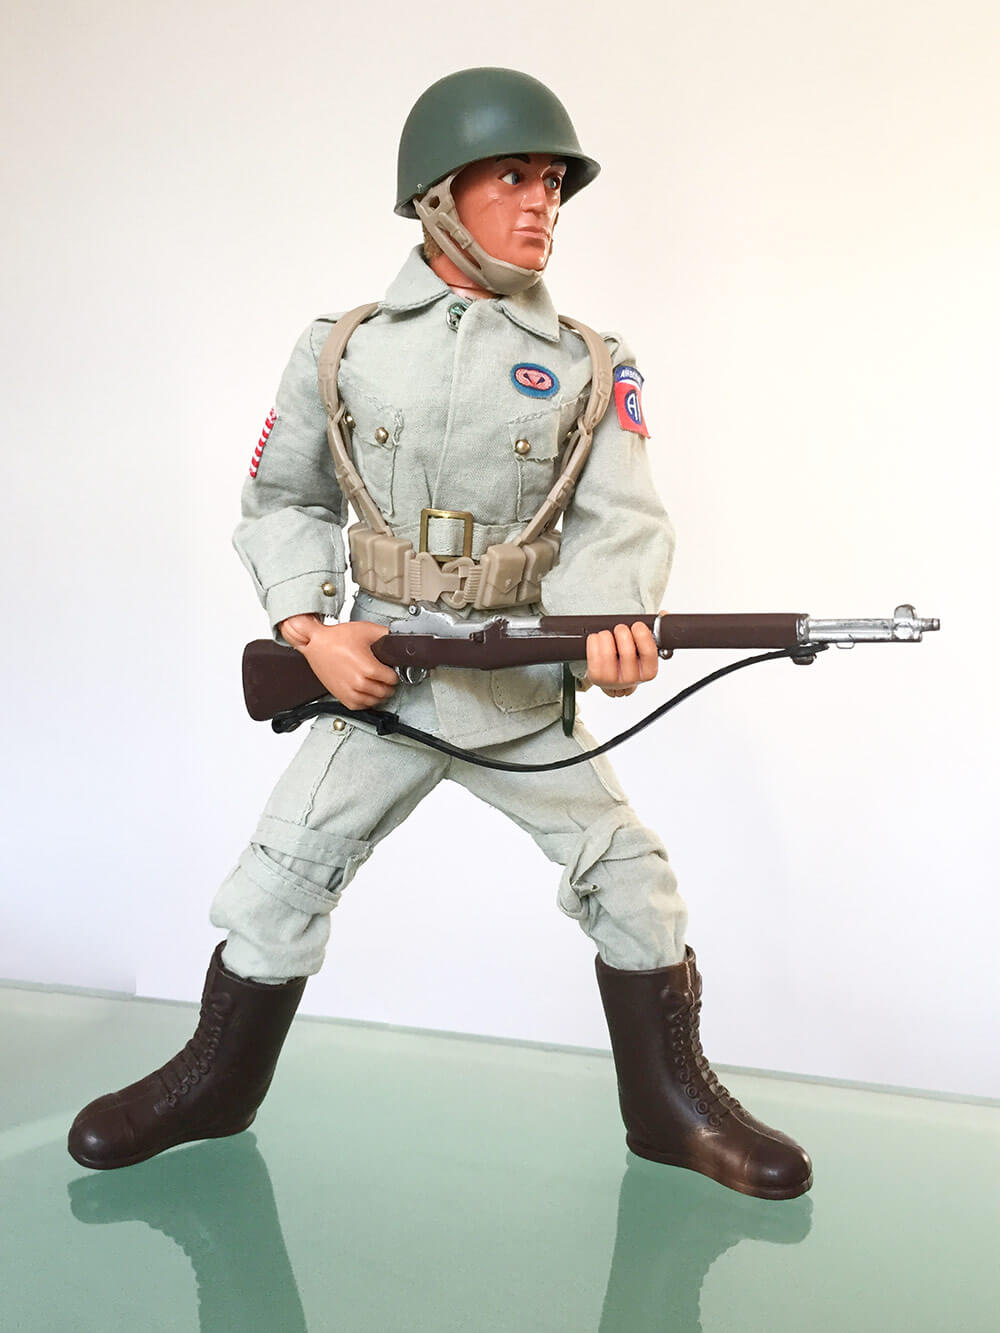 action man paratrooper